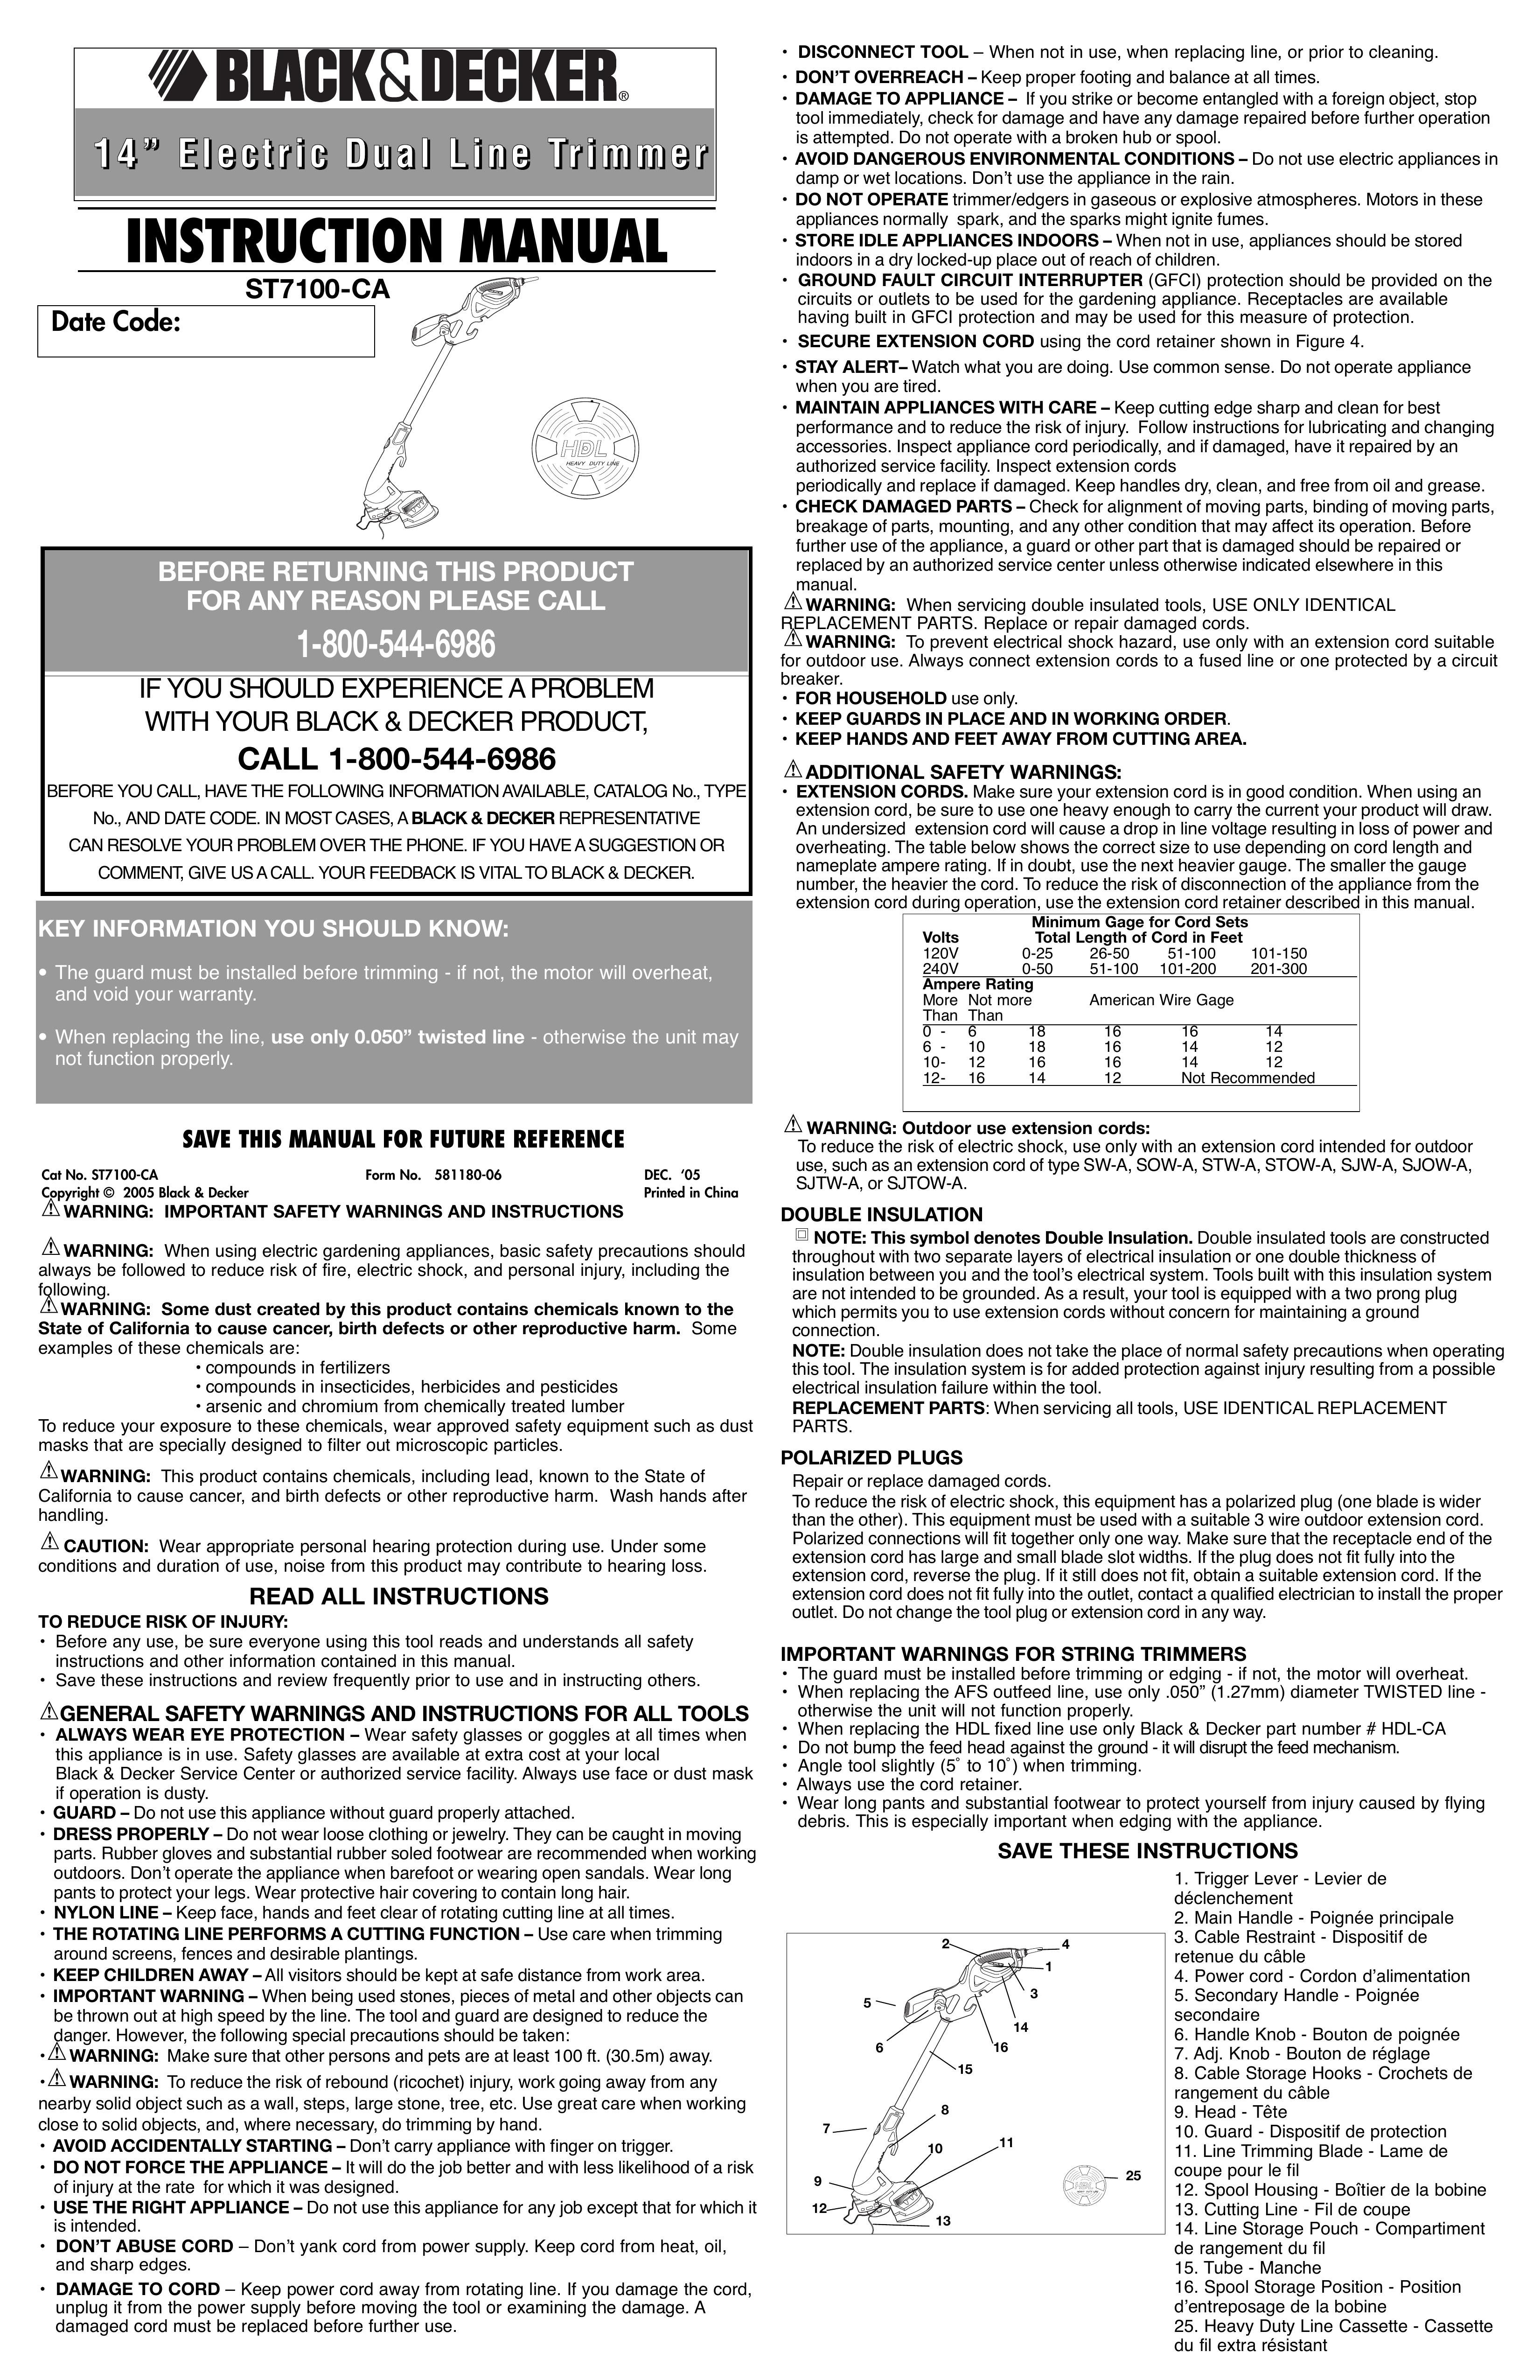 Cobra Electronics ST7100-CA Trimmer User Manual